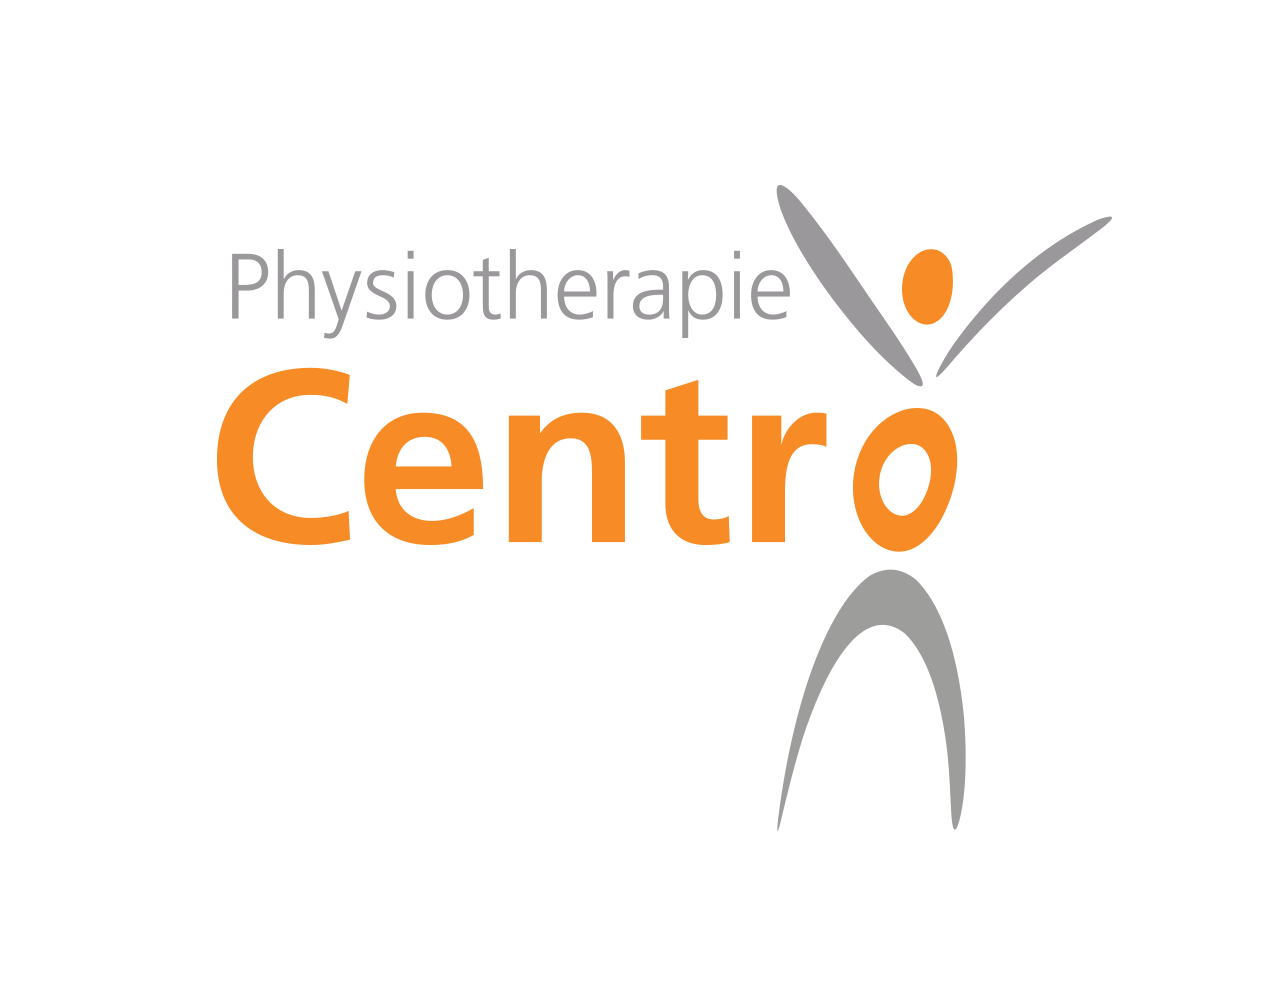 Physio Centro